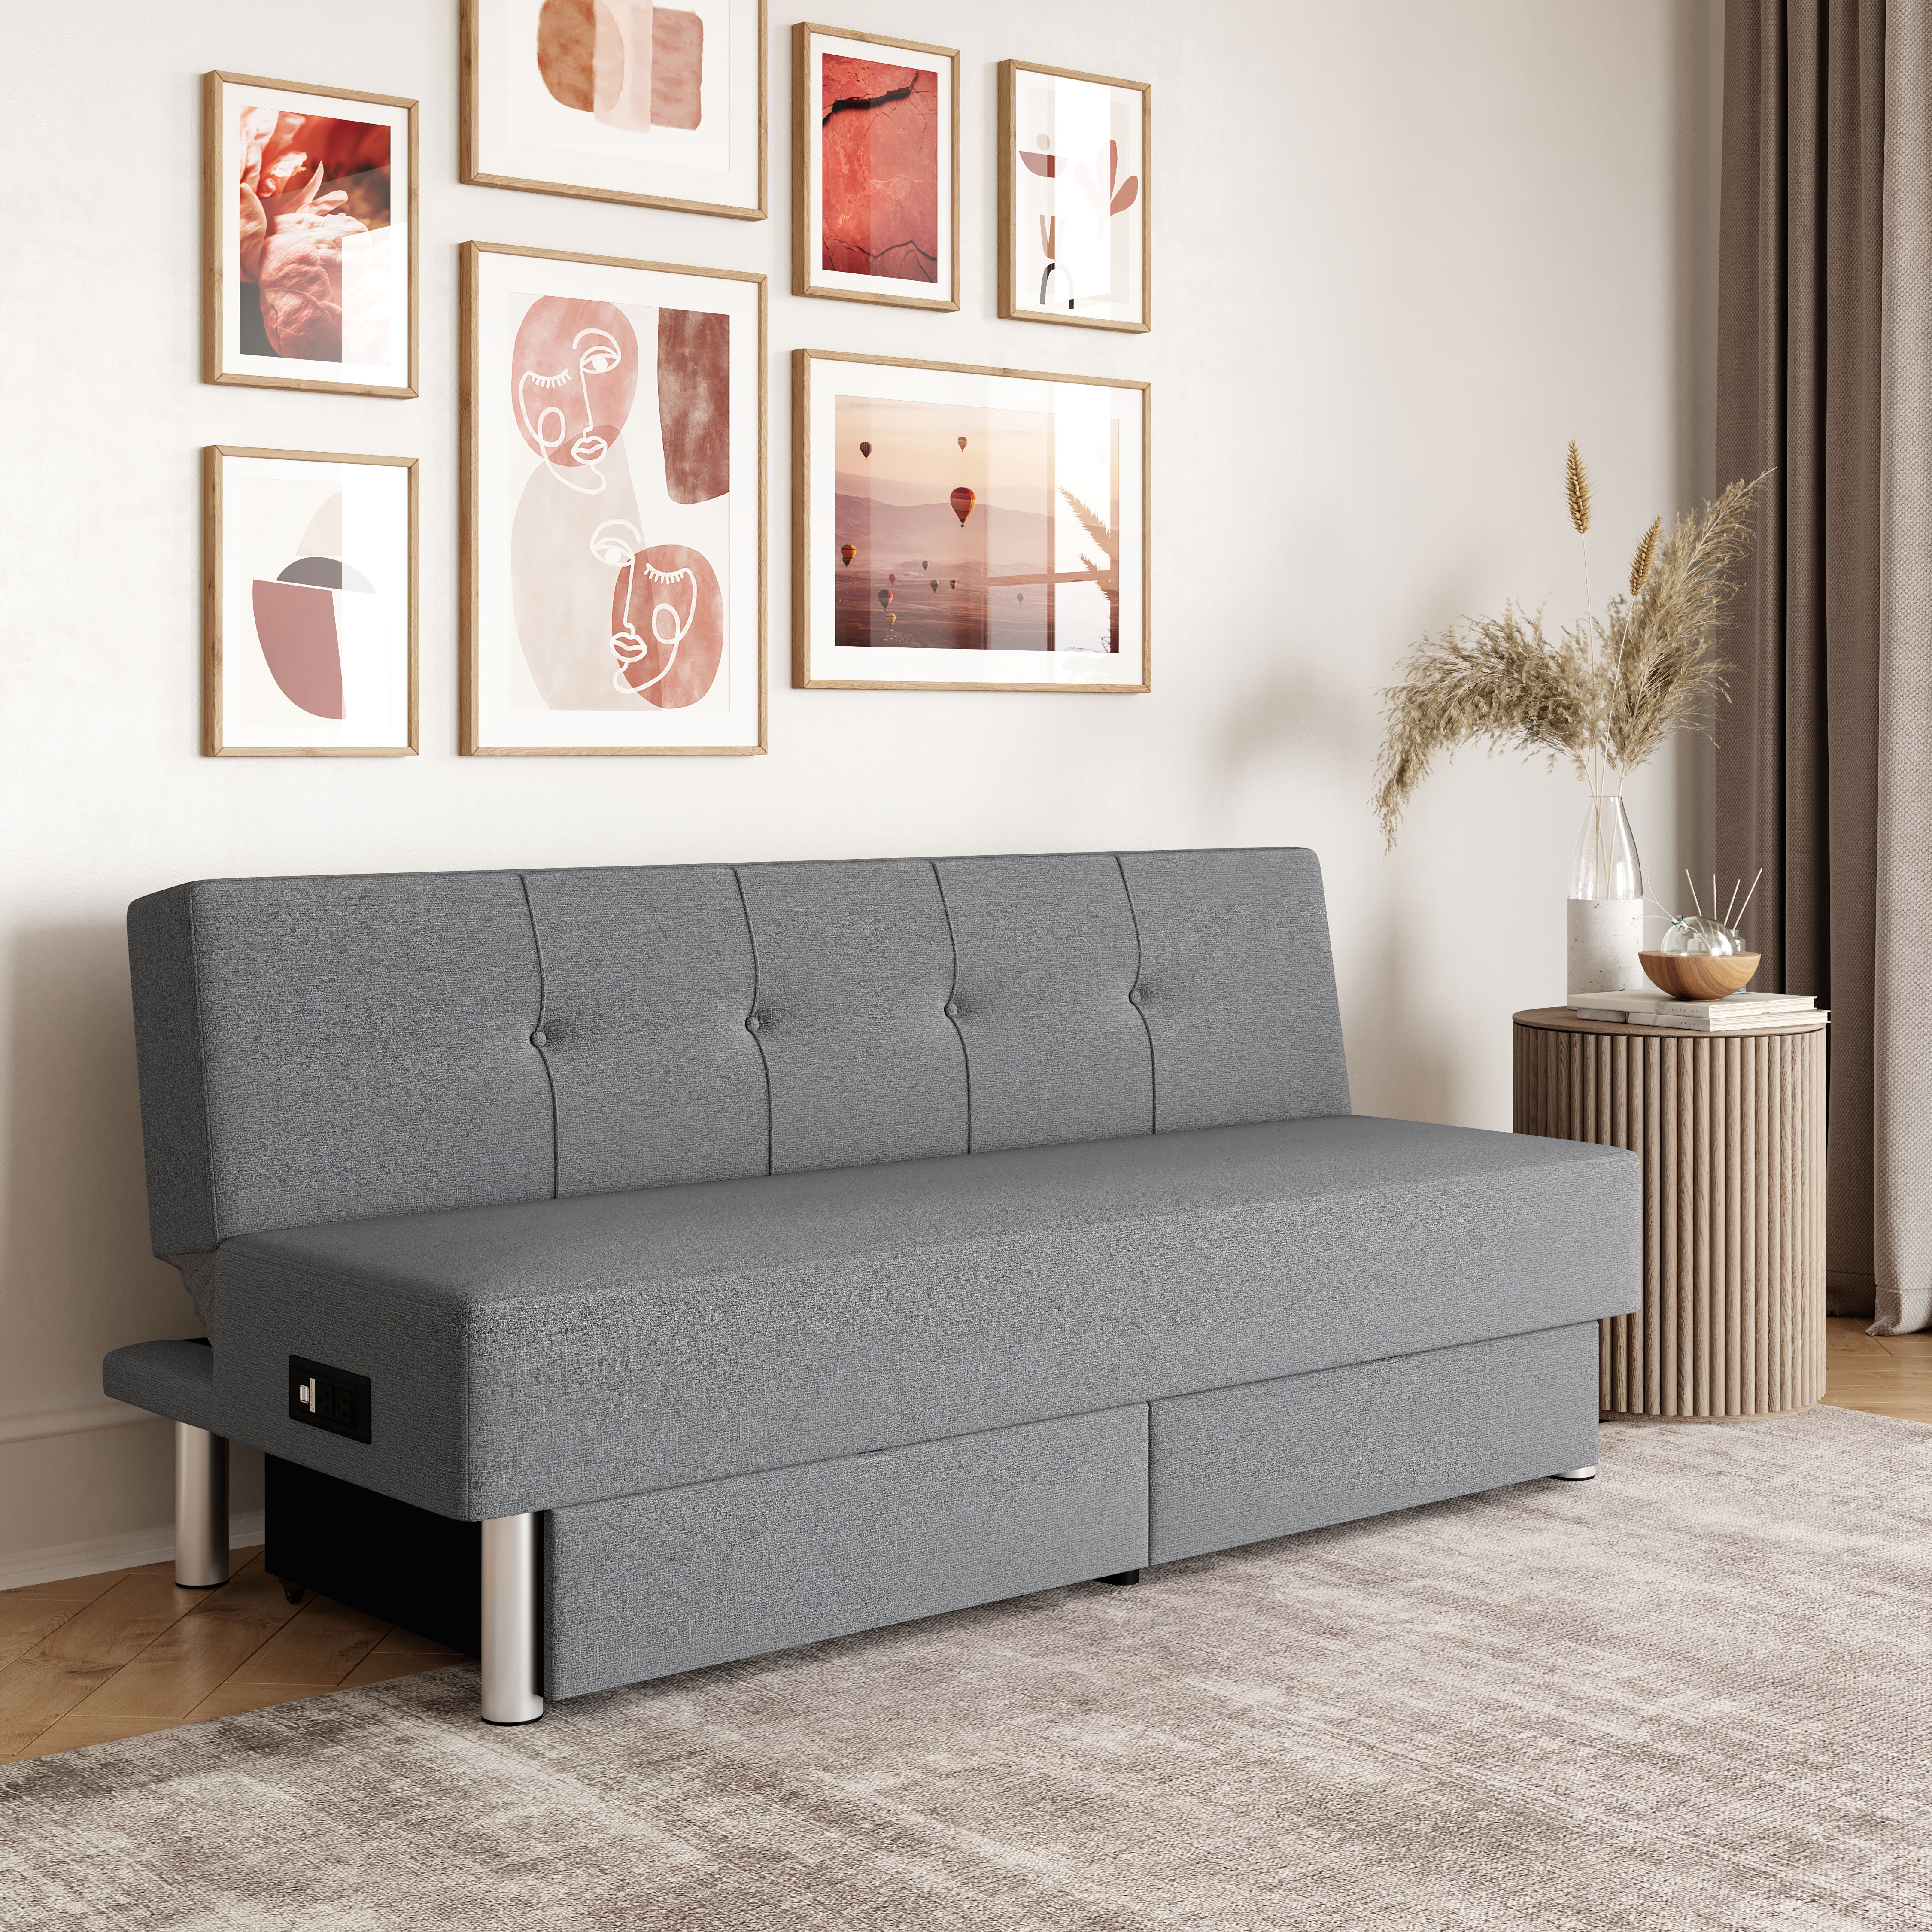 Serta Windsor Futon with Storage and Power, Light Gray Fabric - image 1 of 18